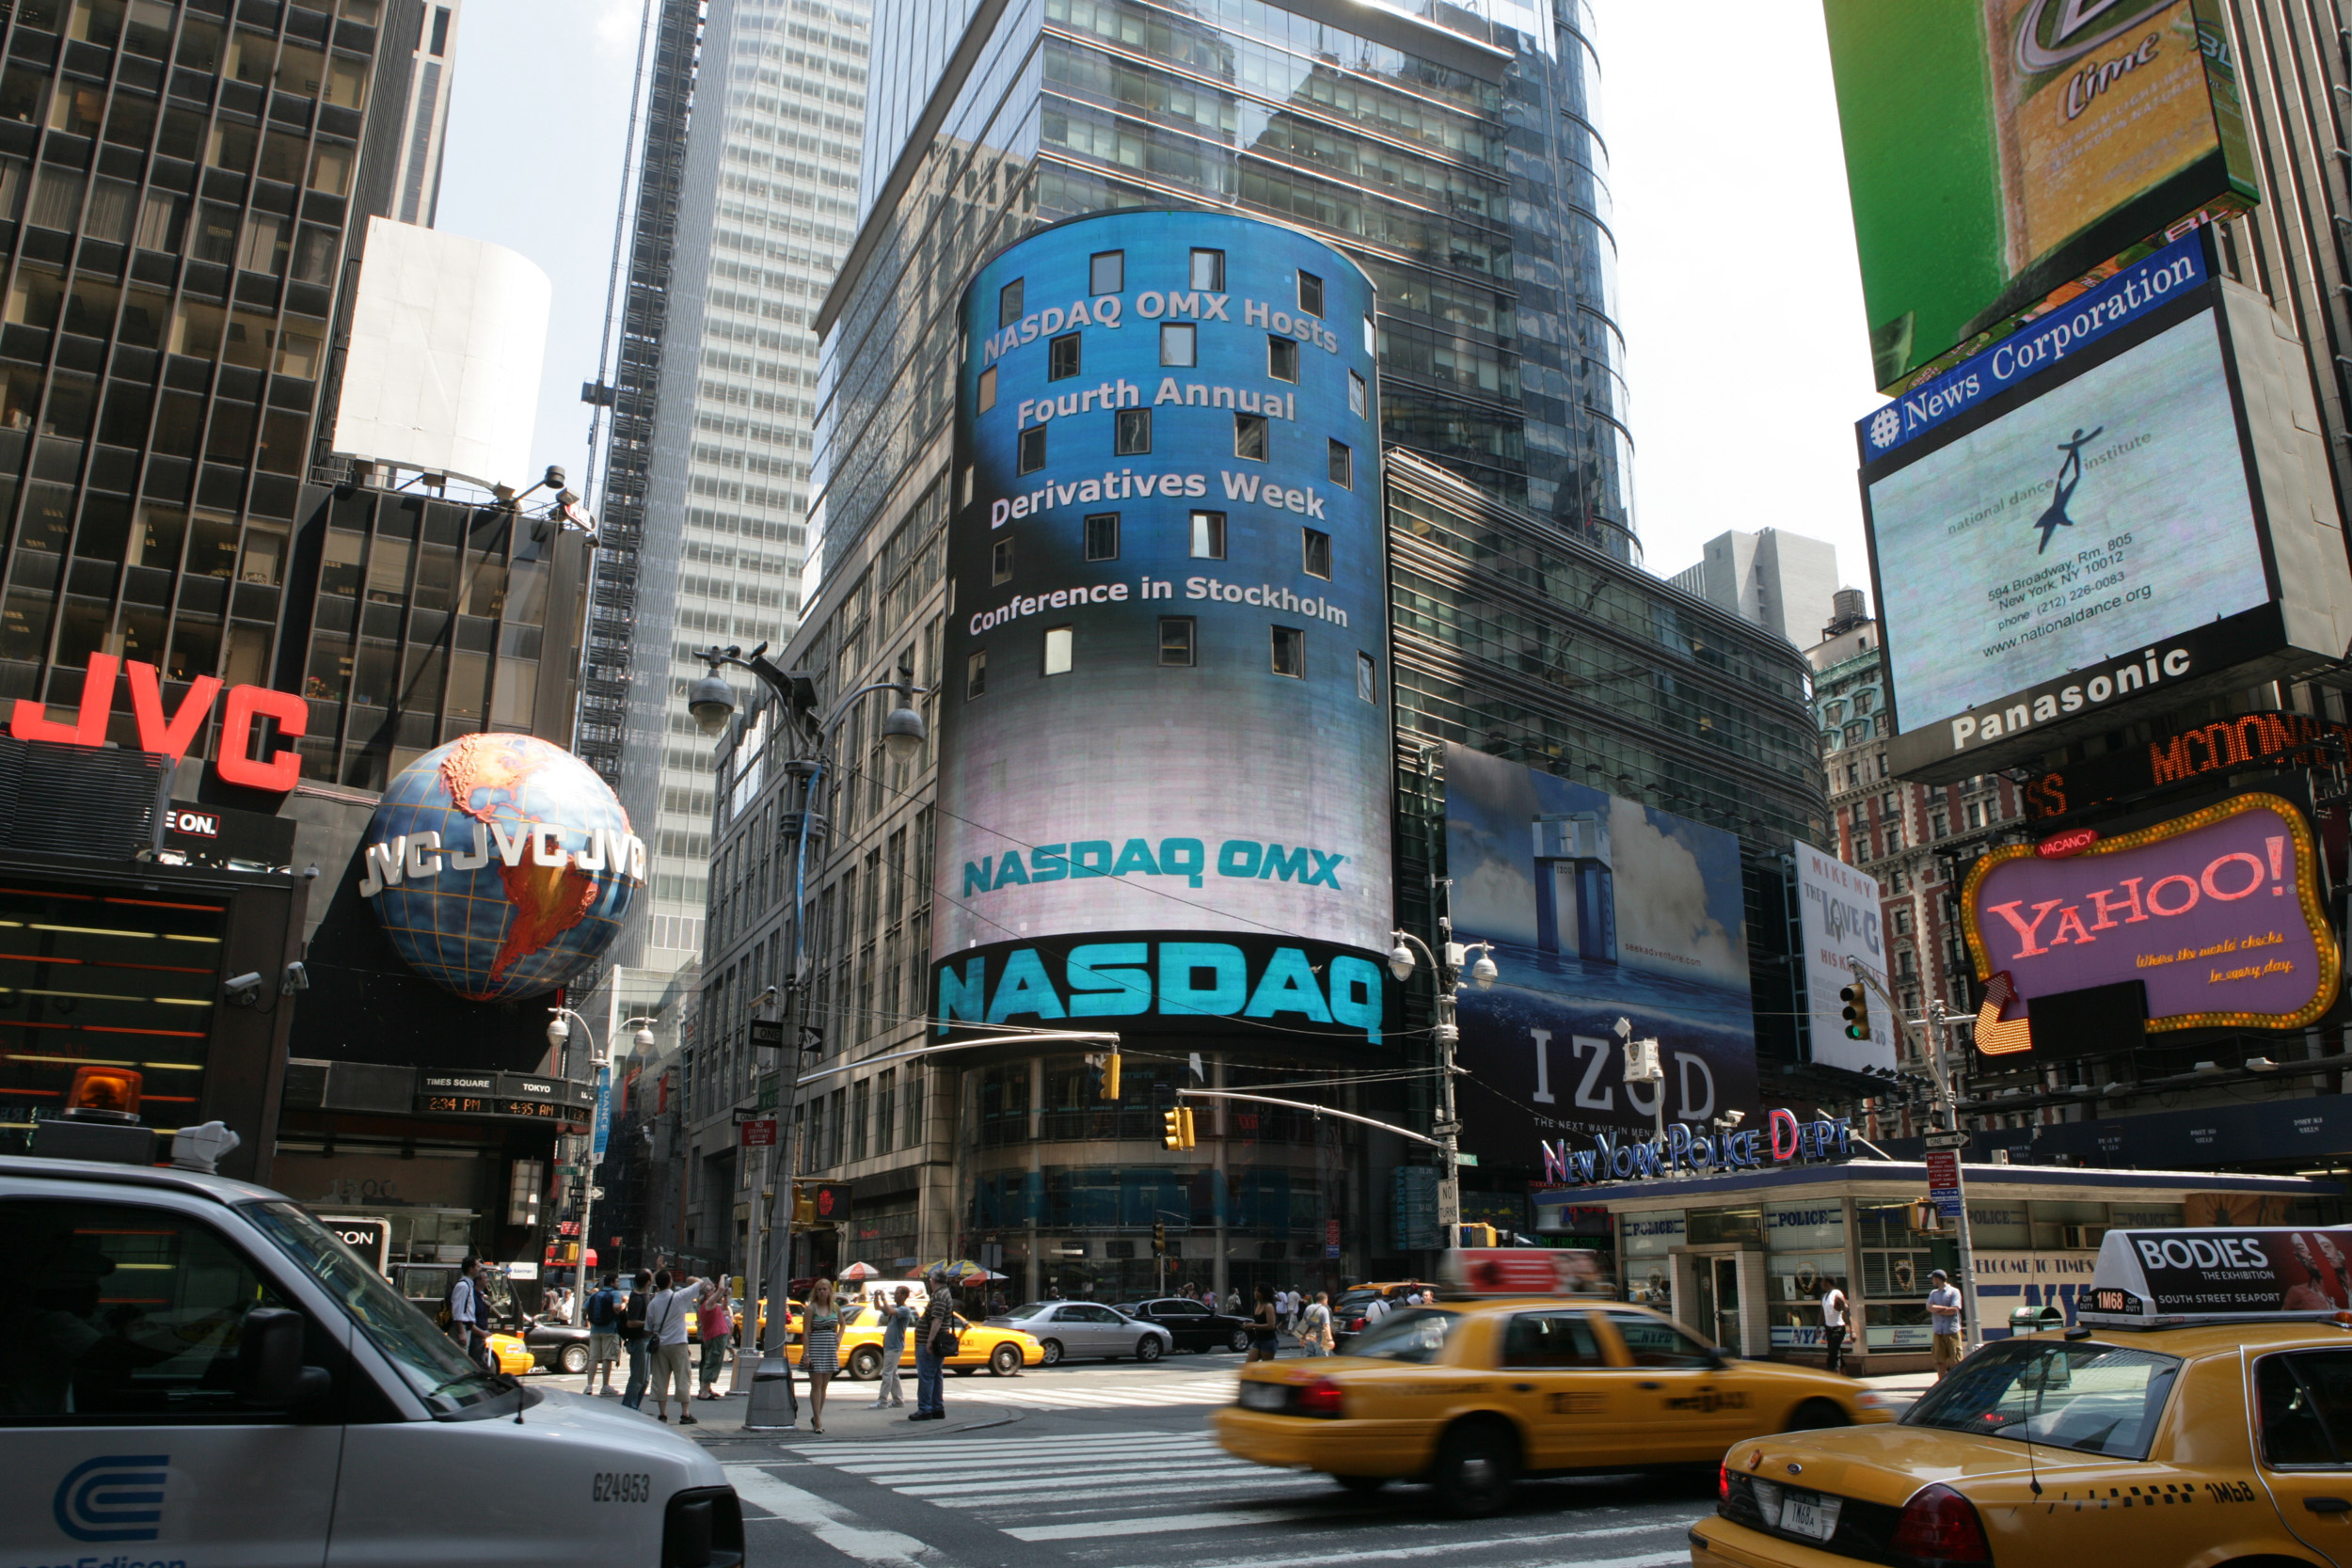 NASDAQ OMX Hosts Fourth Annual Derivatives Week